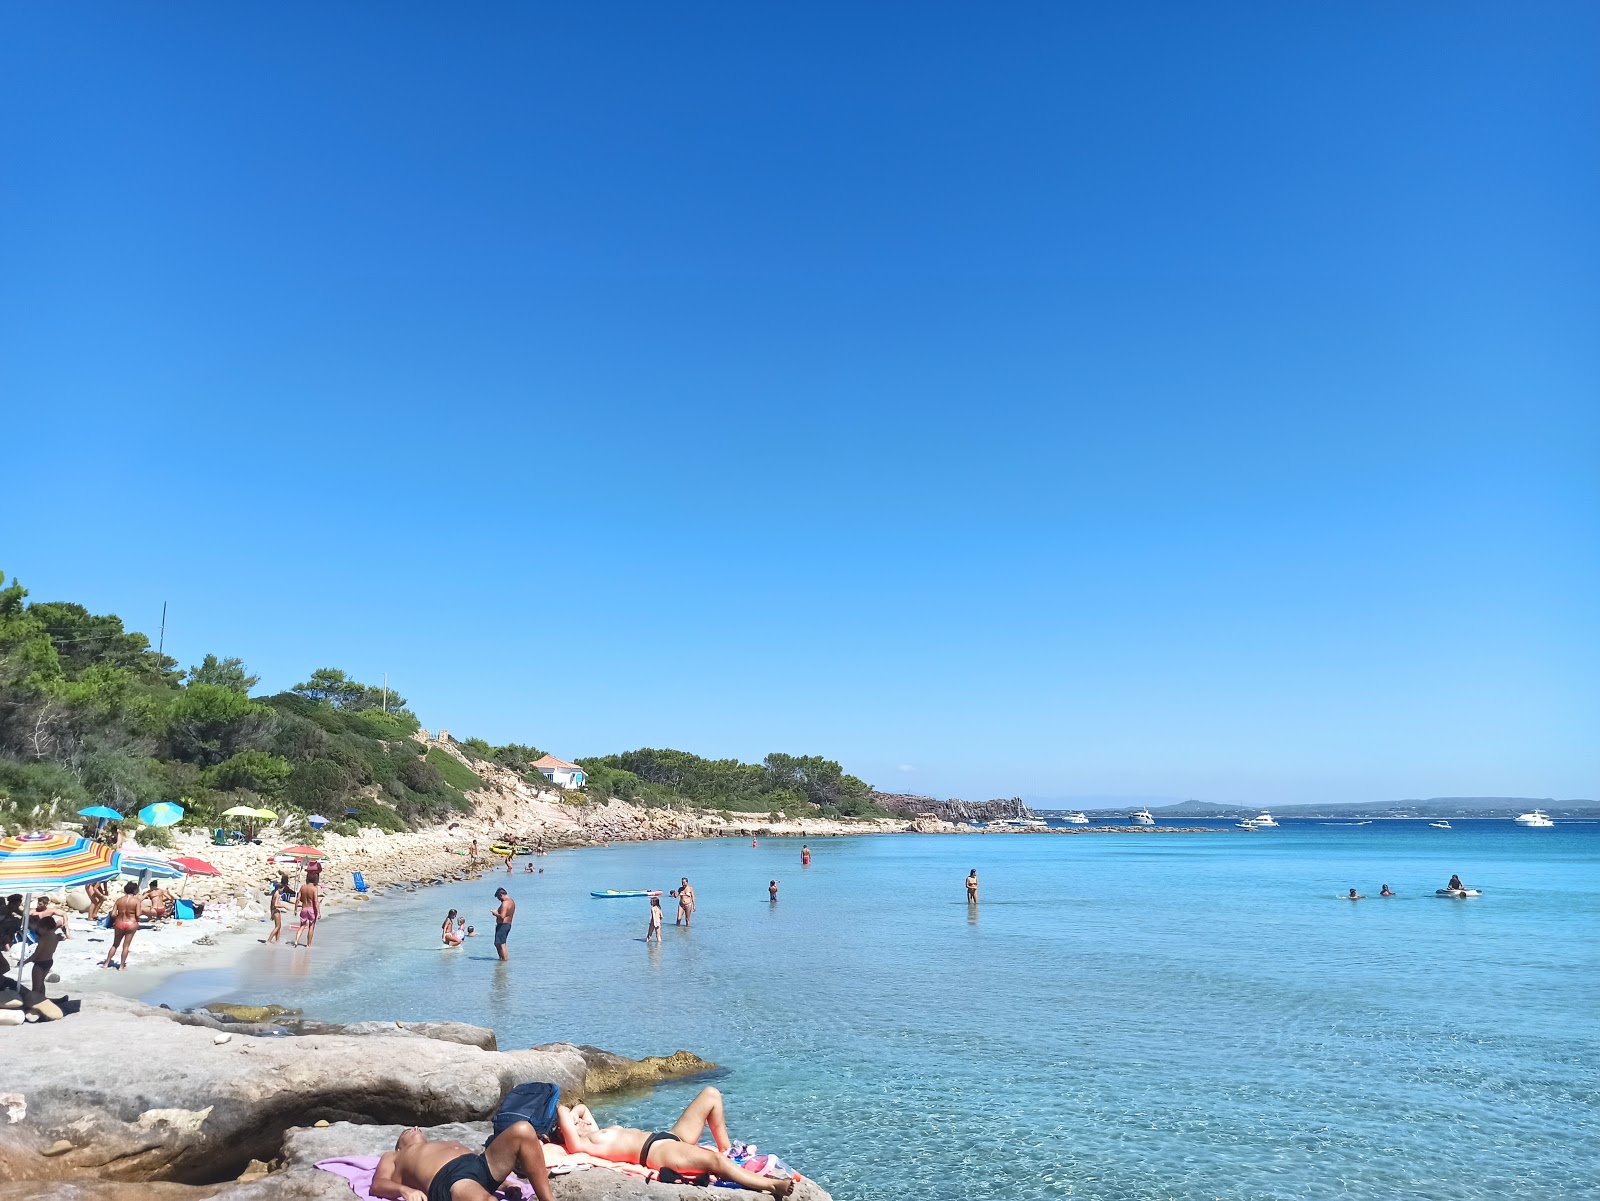 Fotografie cu Guidi beach - locul popular printre cunoscătorii de relaxare